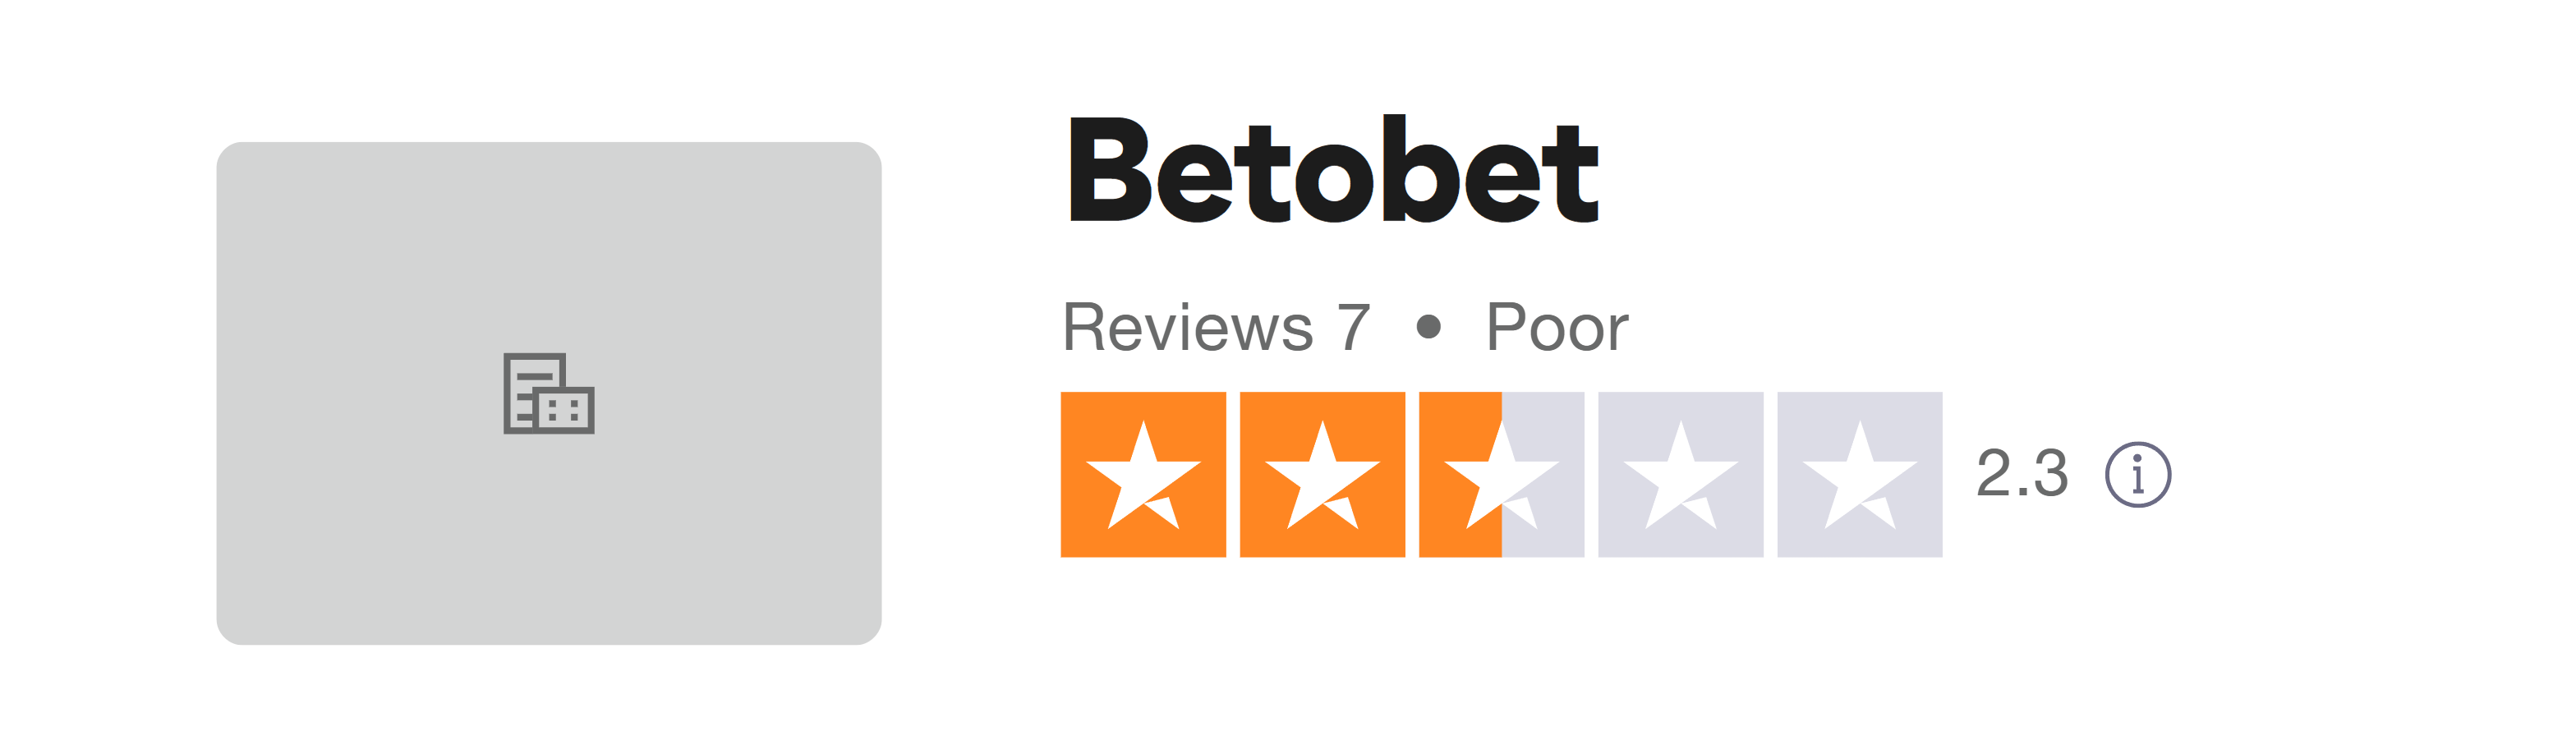 Trustpilot rating screenshot for the BetOBet